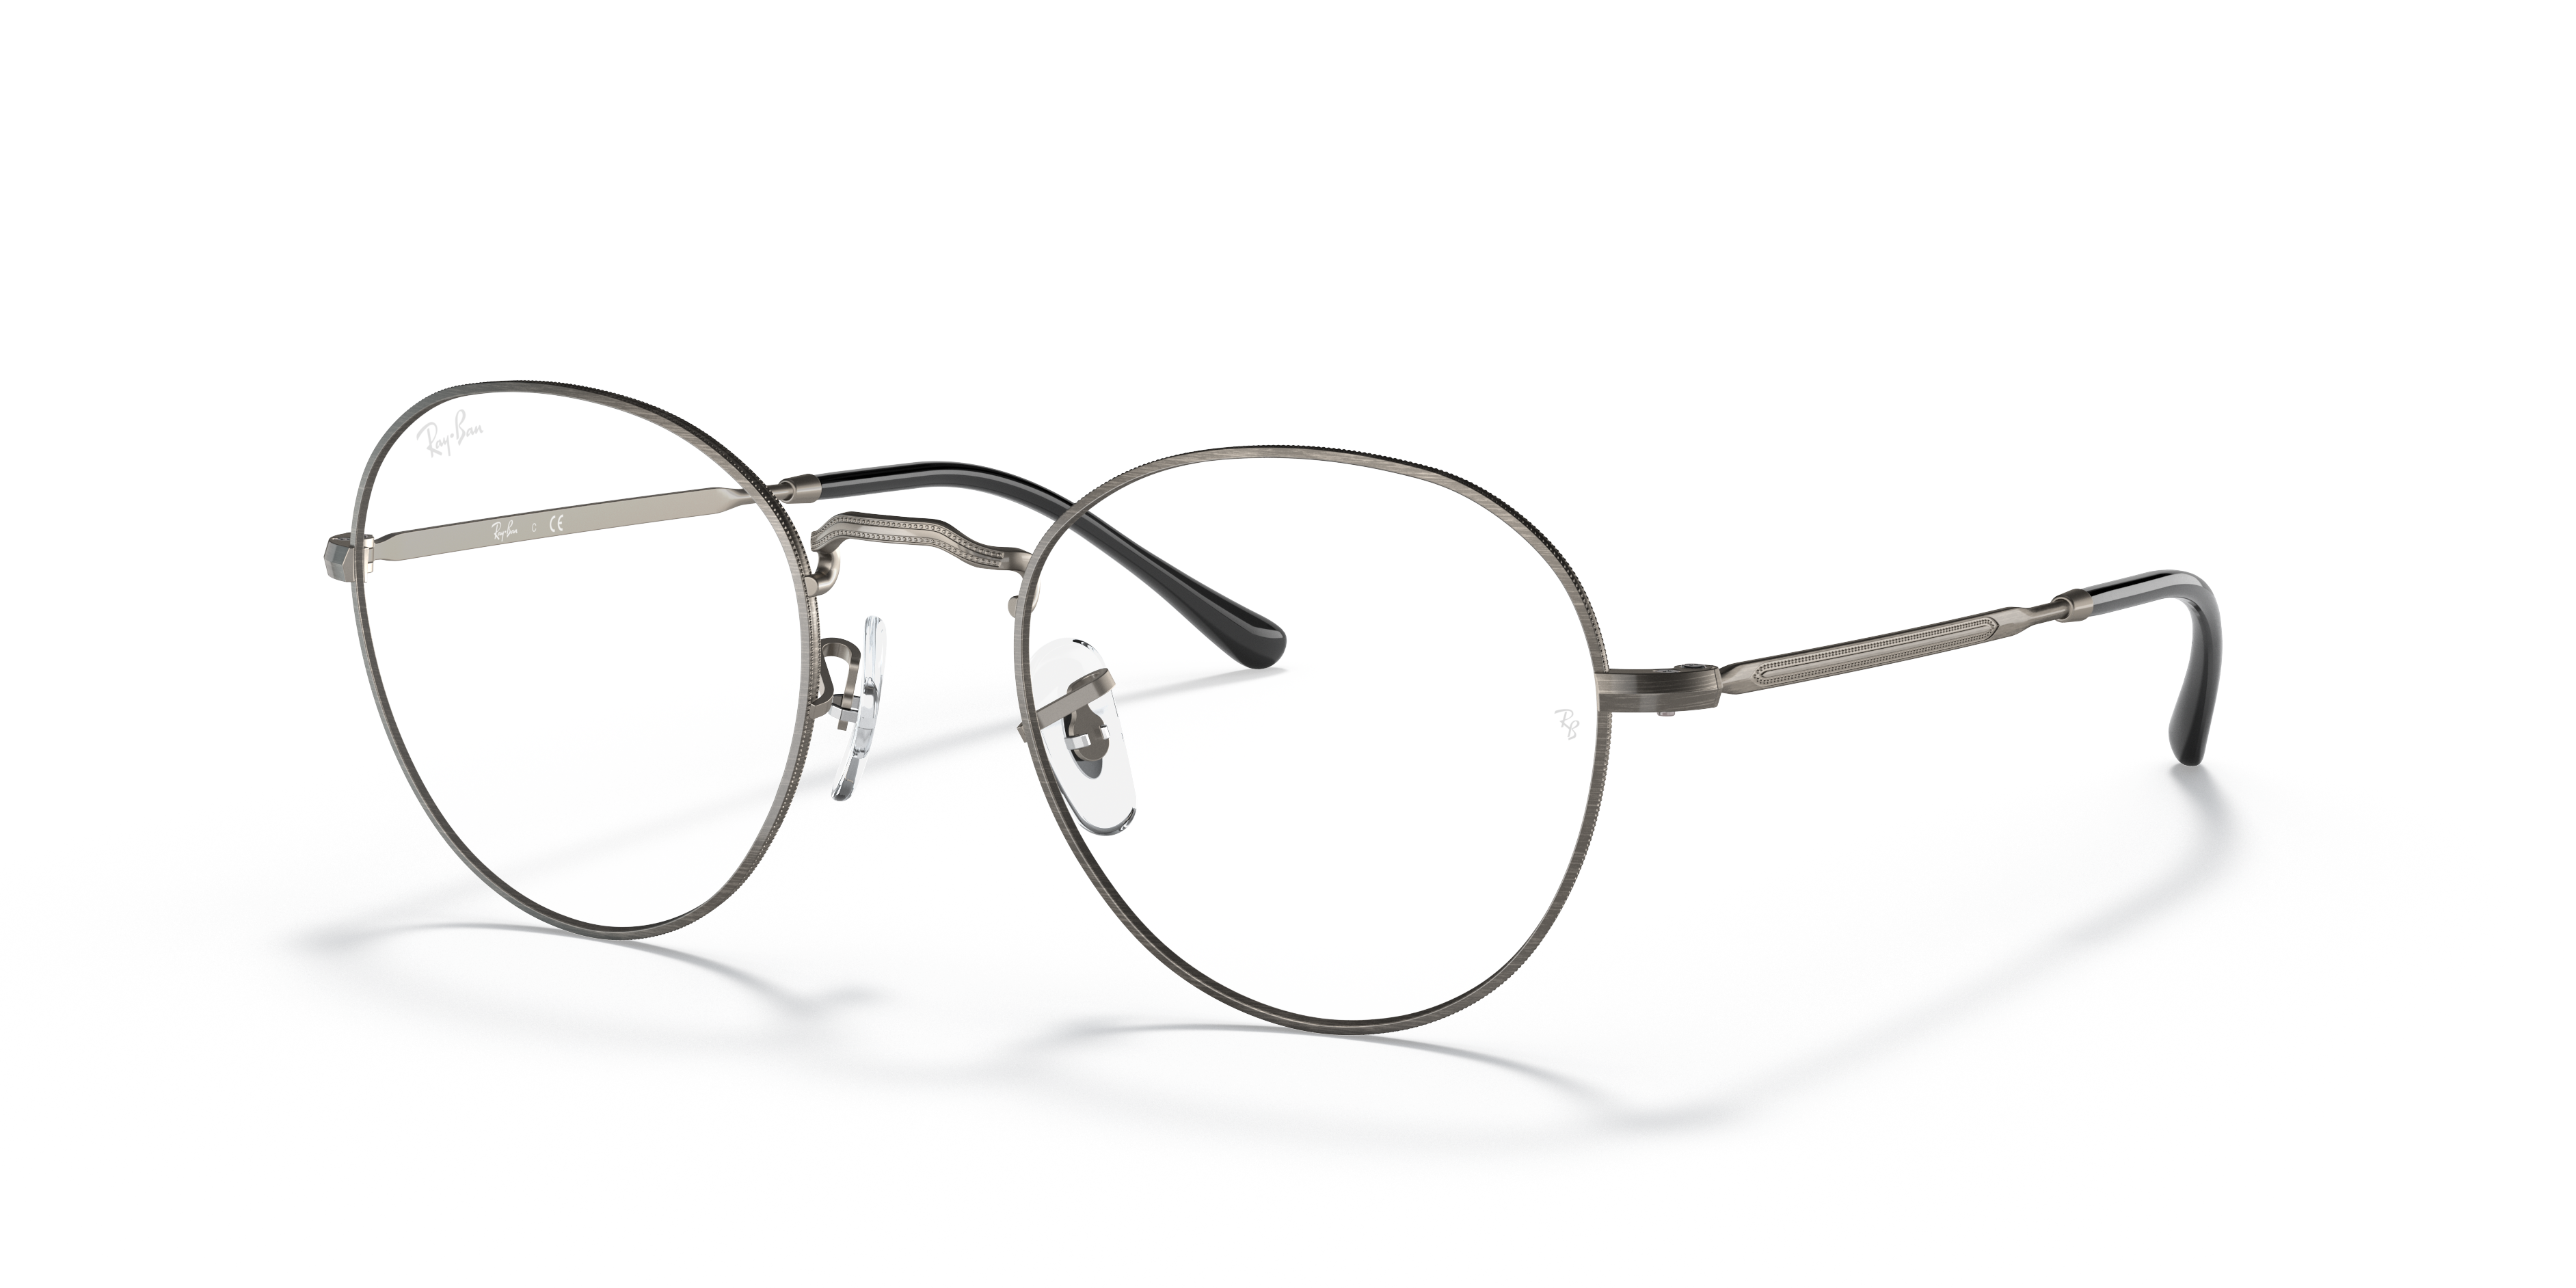 ROUND METAL OPTICS II Eyeglasses with Gunmetal Frame - RB3582V